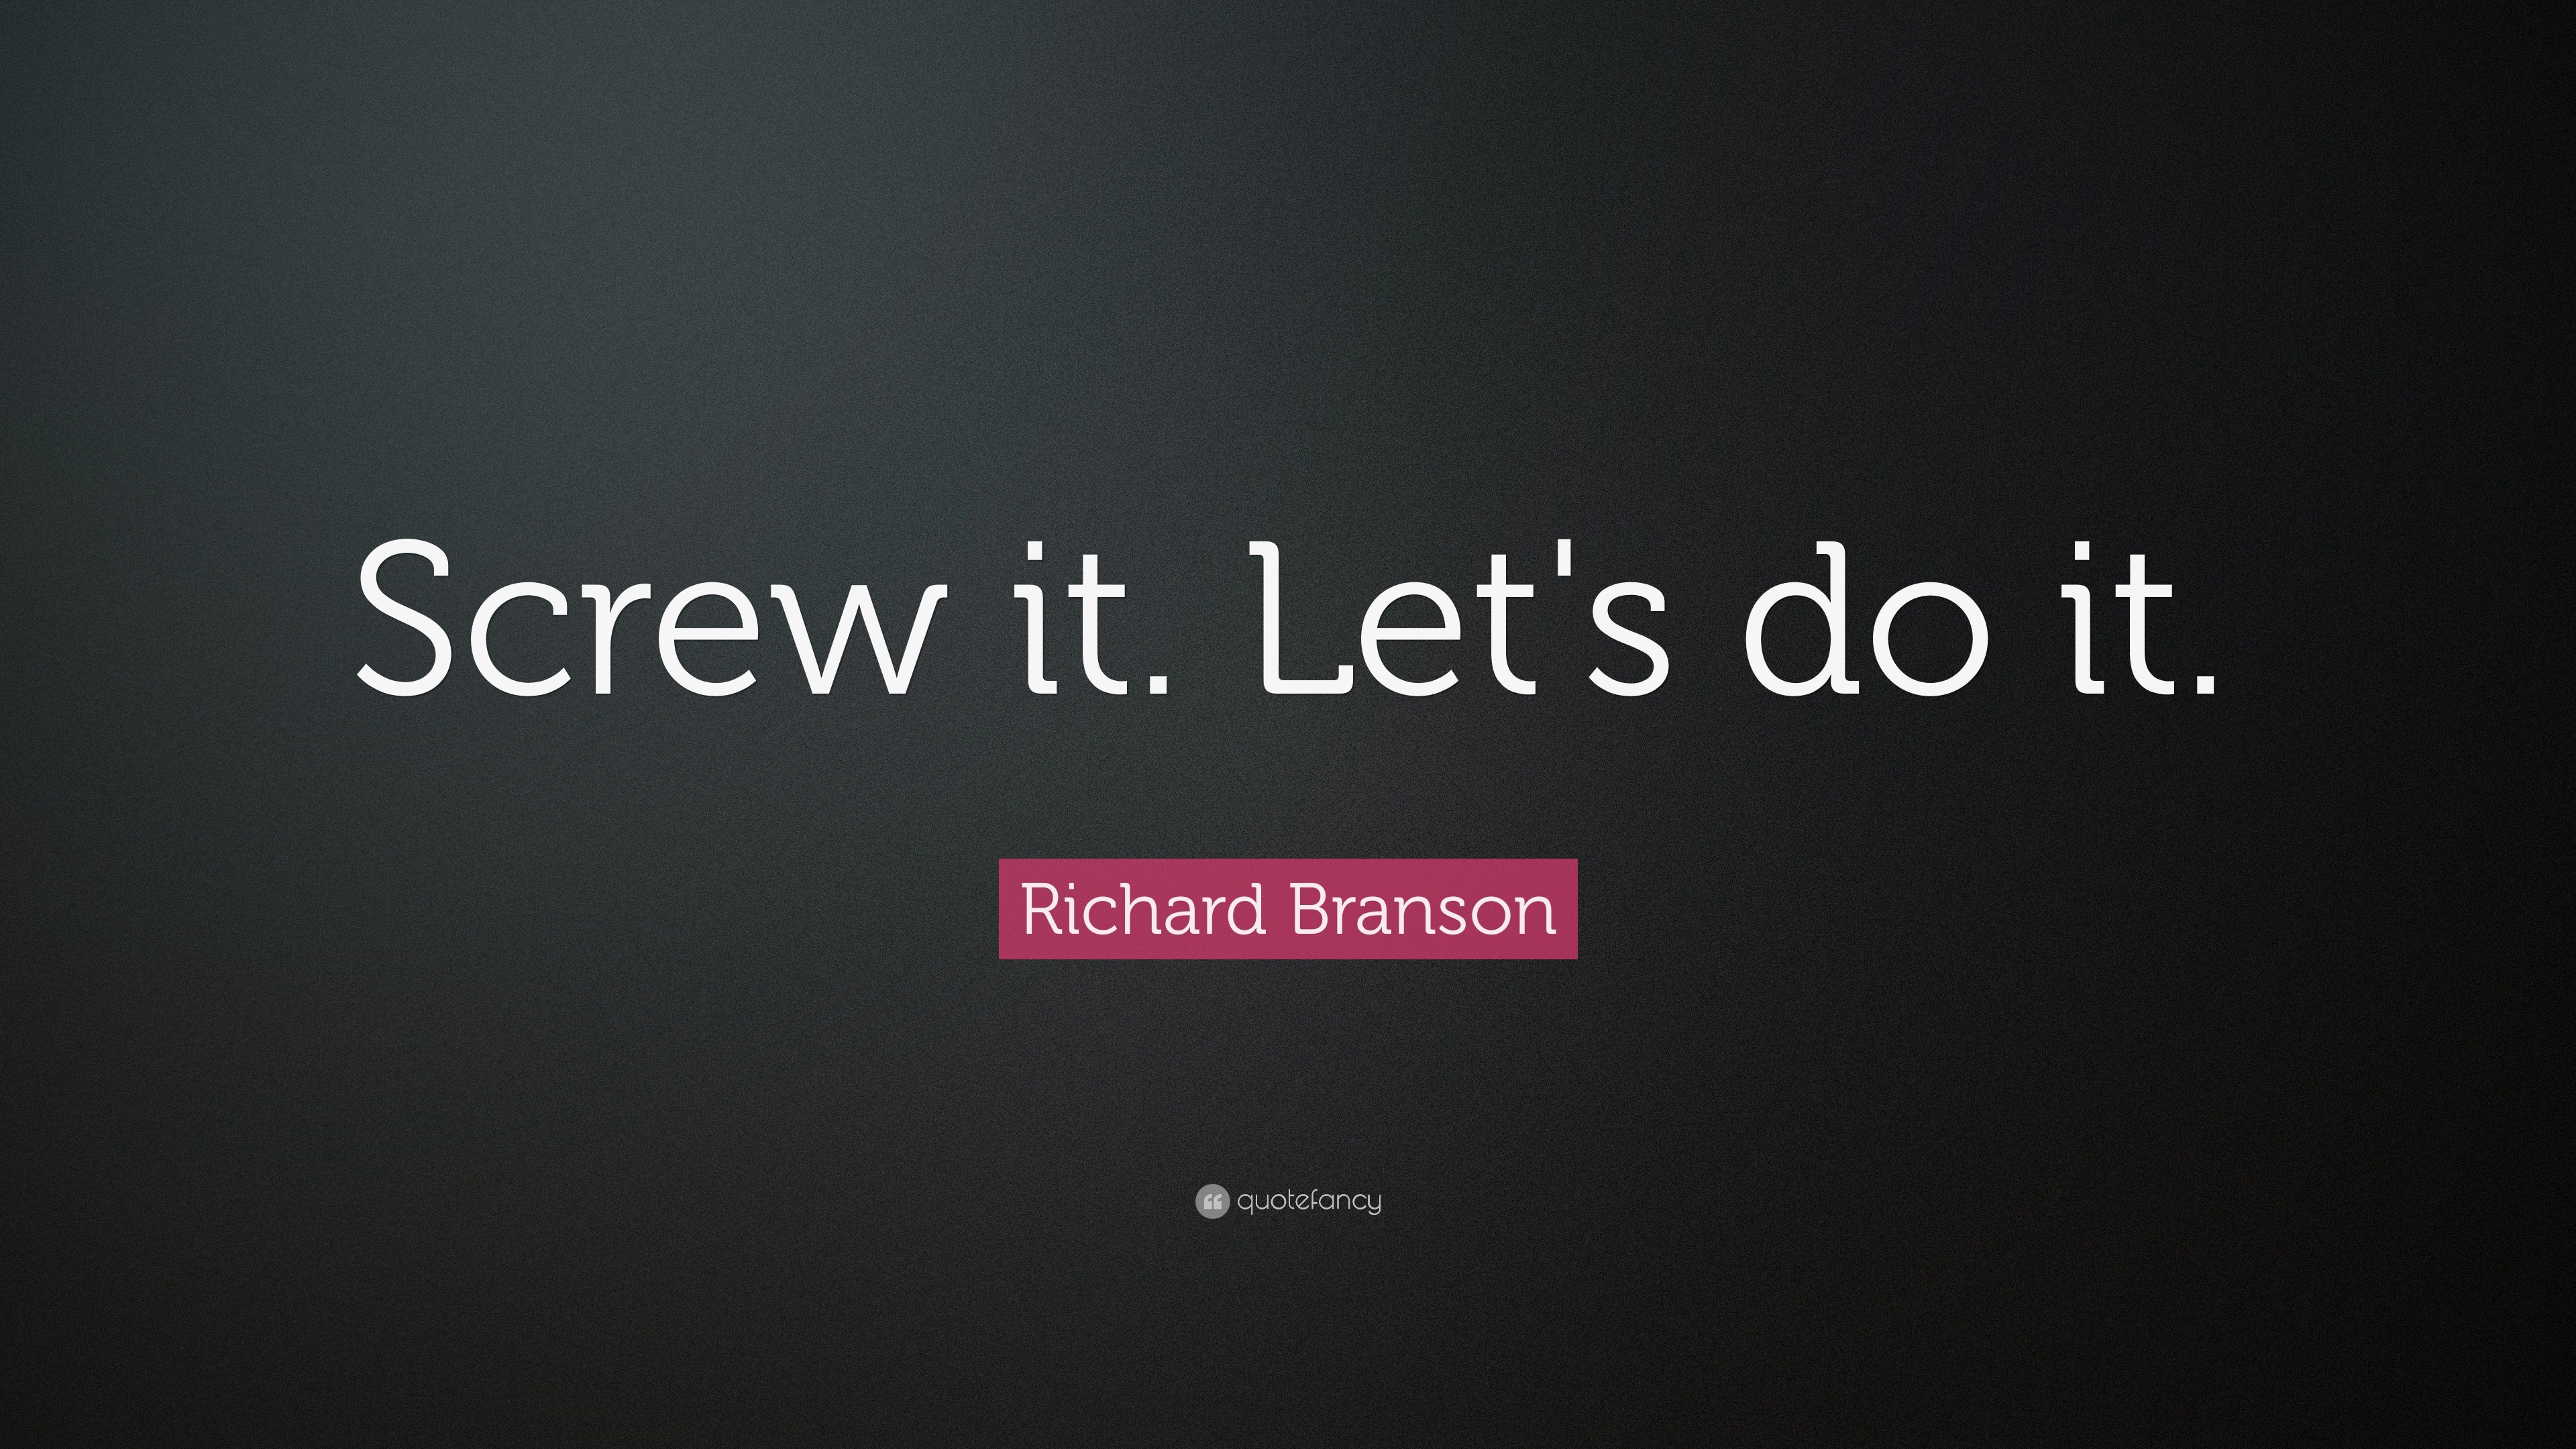 Richard Branson Quote: “Screw it. Let's do it.”